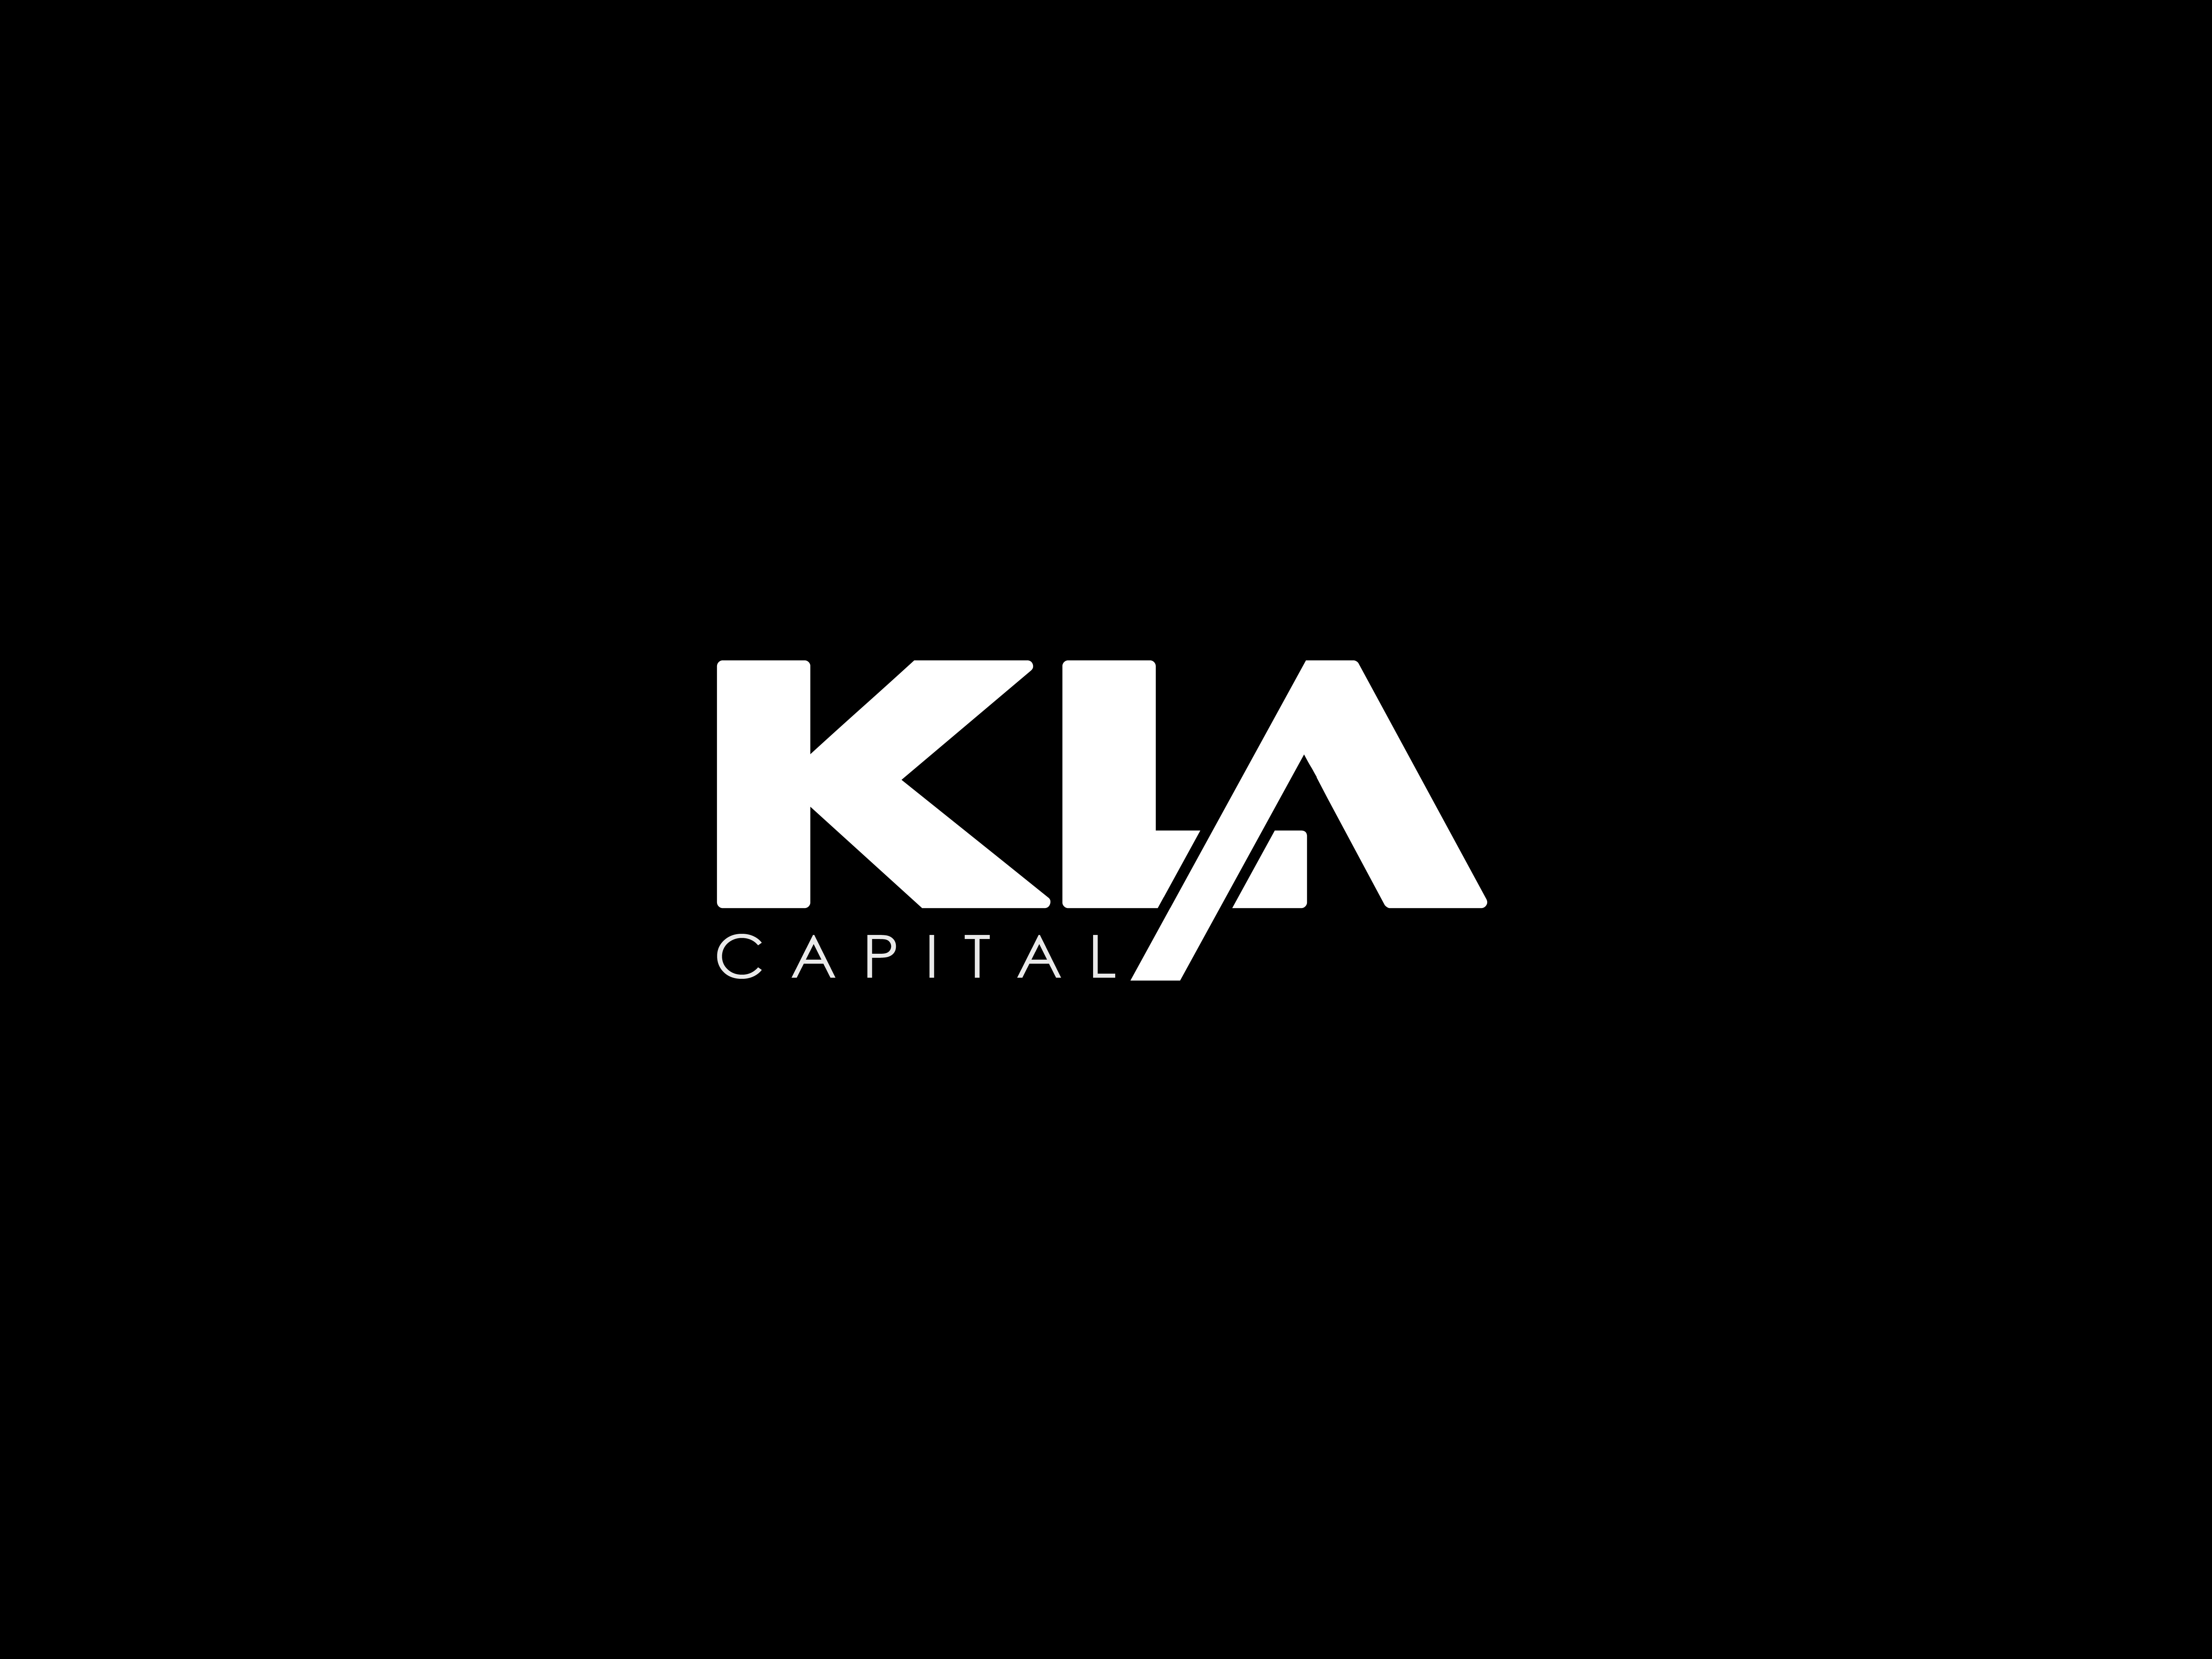 KLA Capital logo